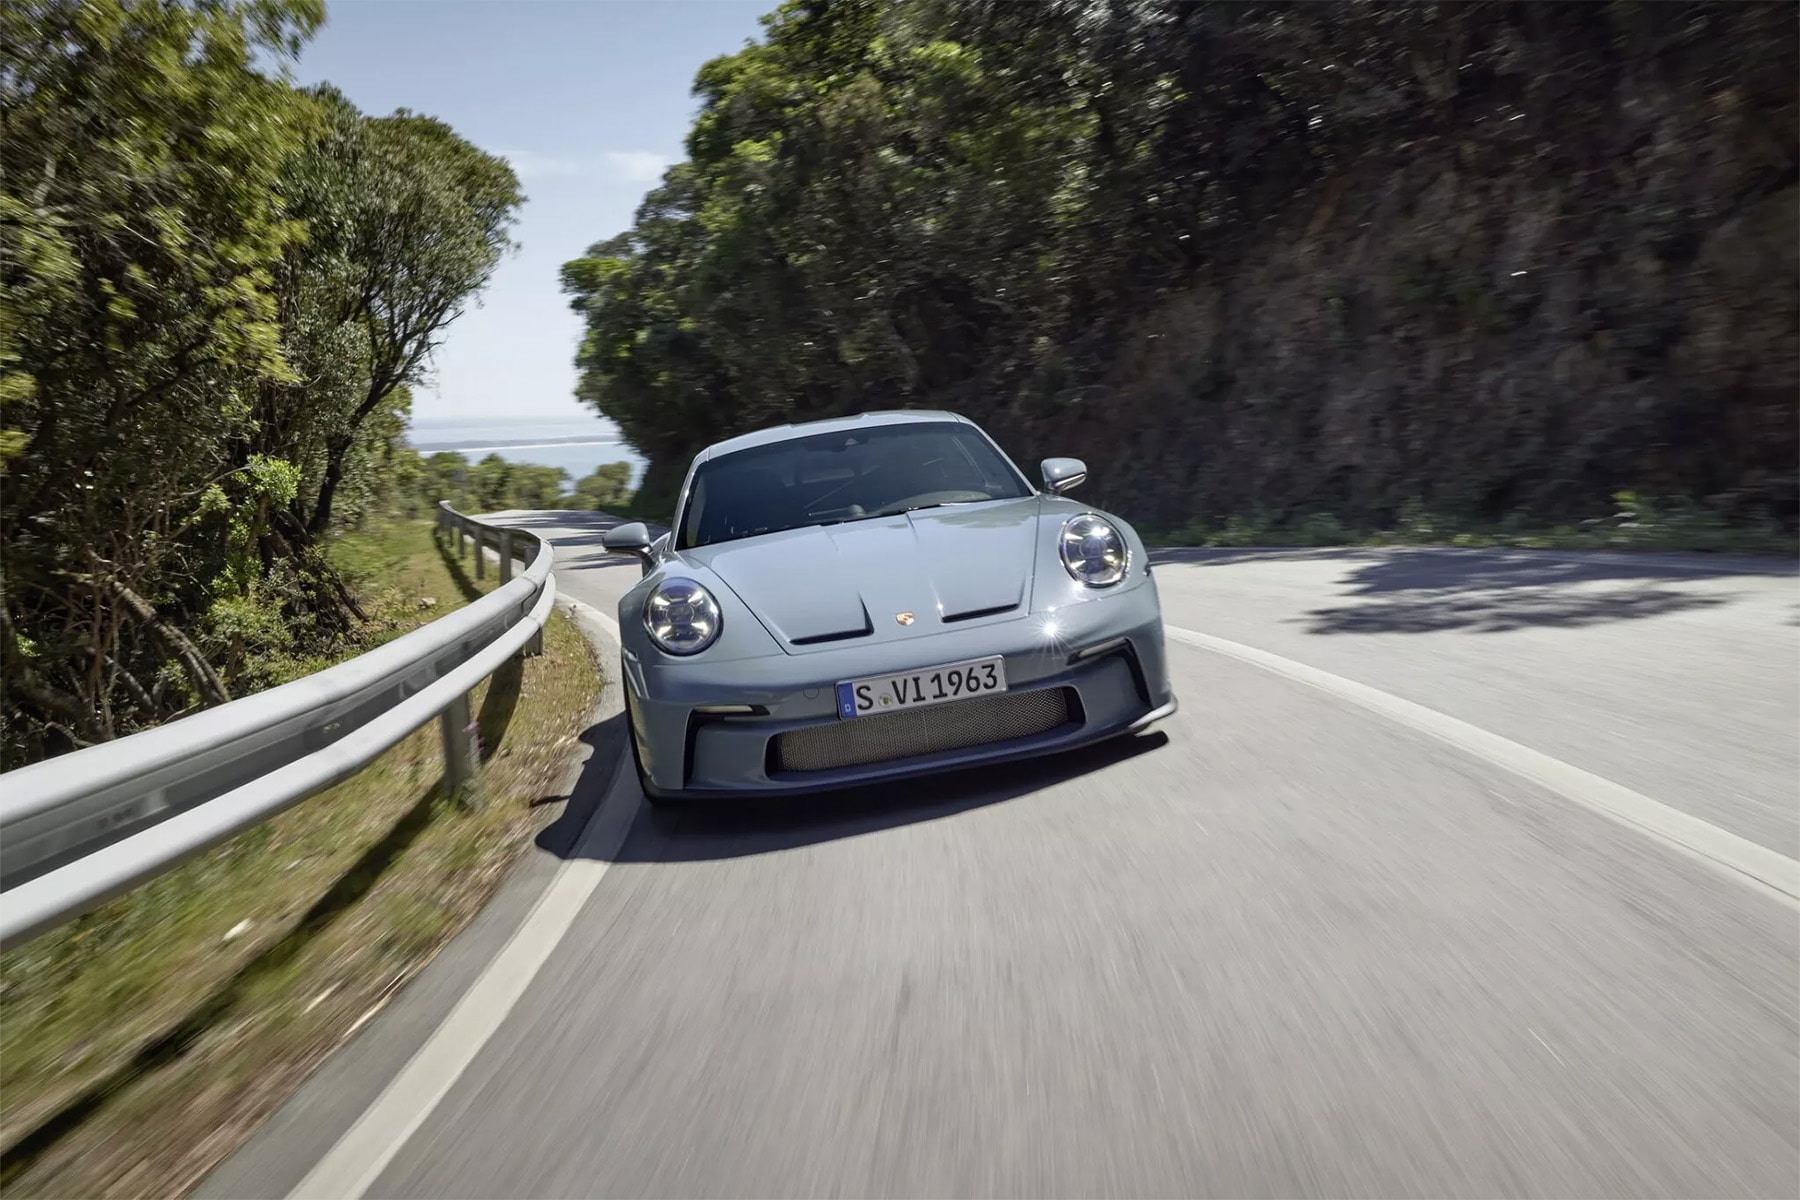 Porsche 全球限量 1,963 輛最新車型 911 S/T 正式發表